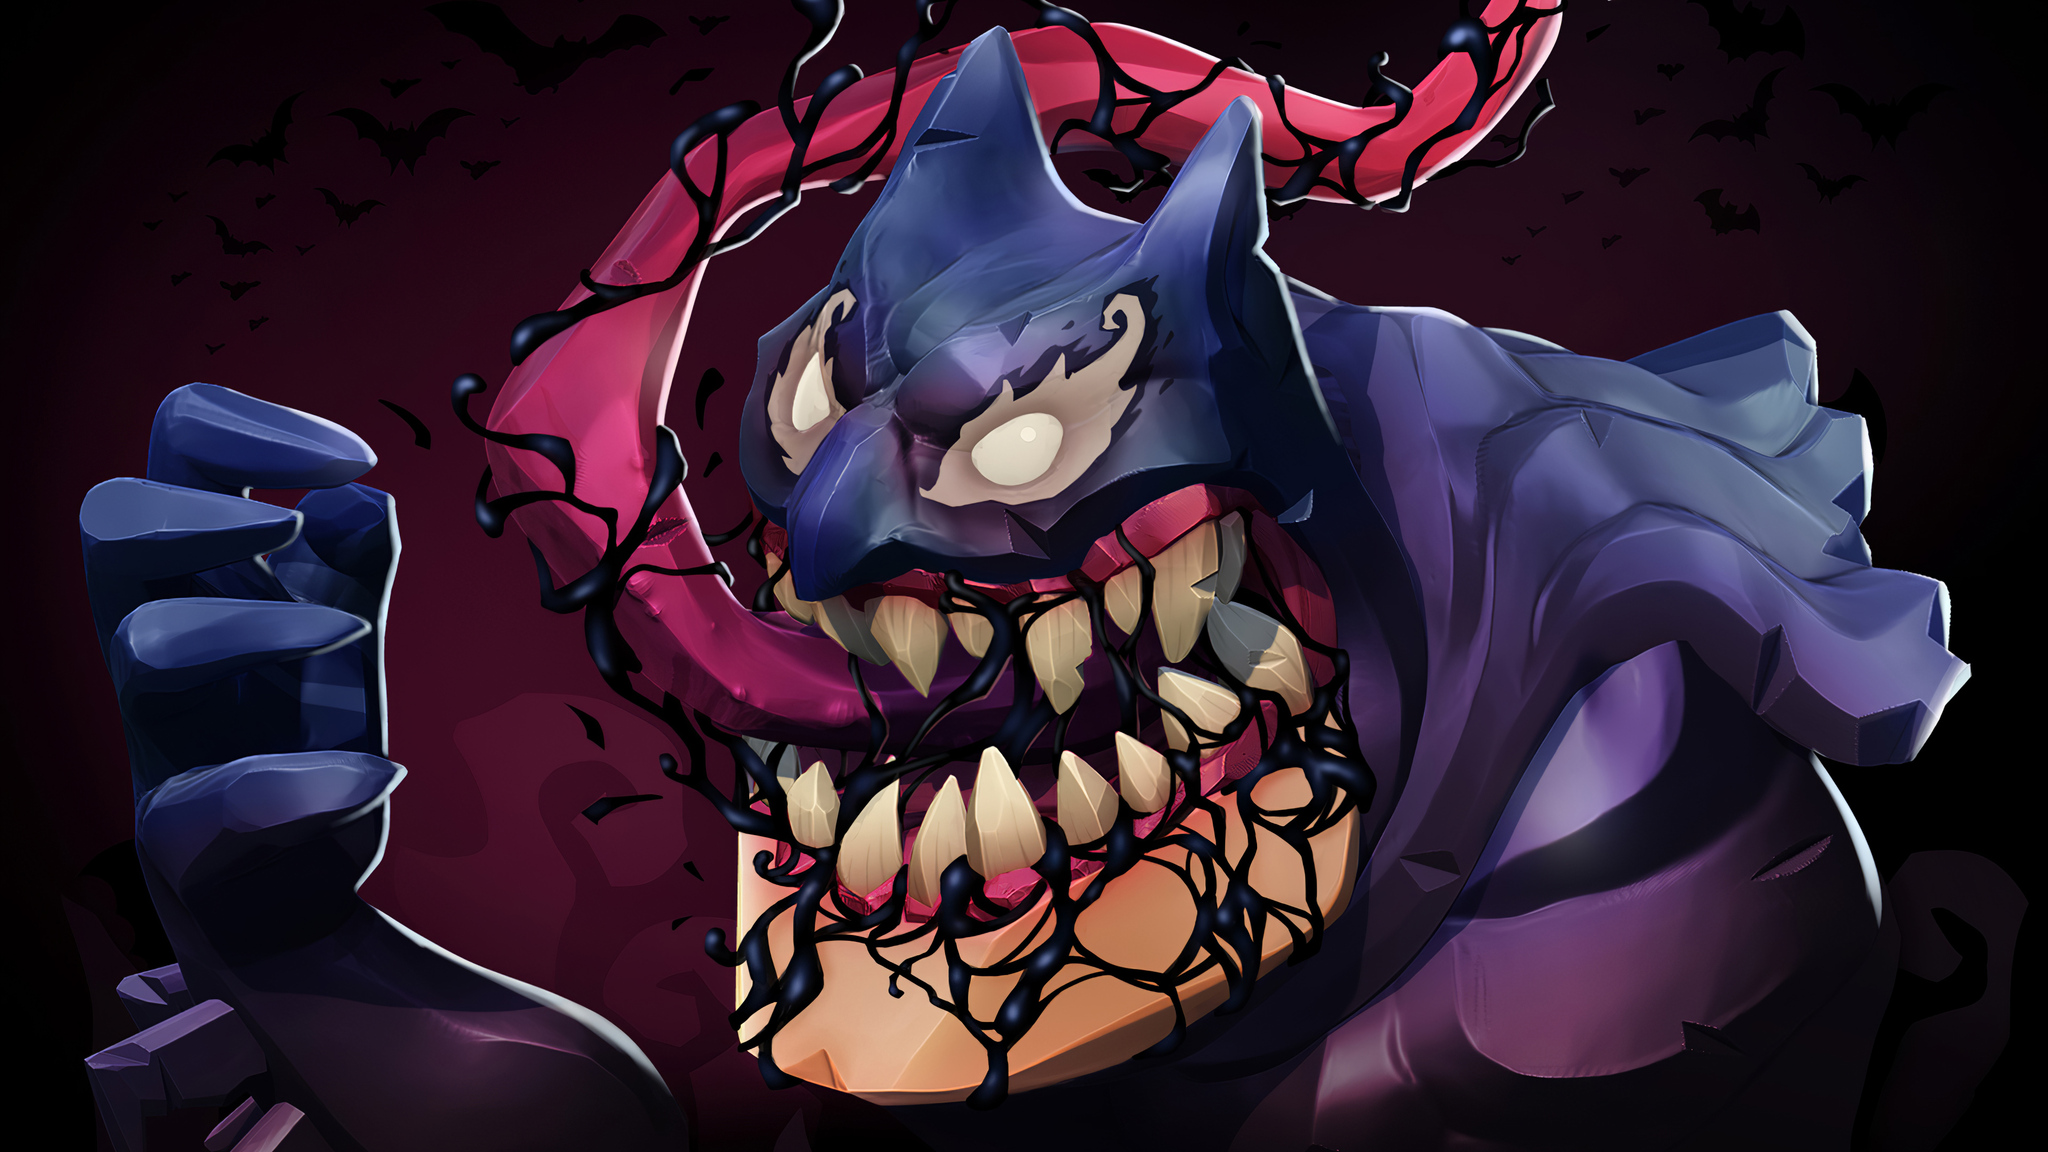 Venom Batman In 2048x1152 Resolution. venom-batman-mn.jpg. 